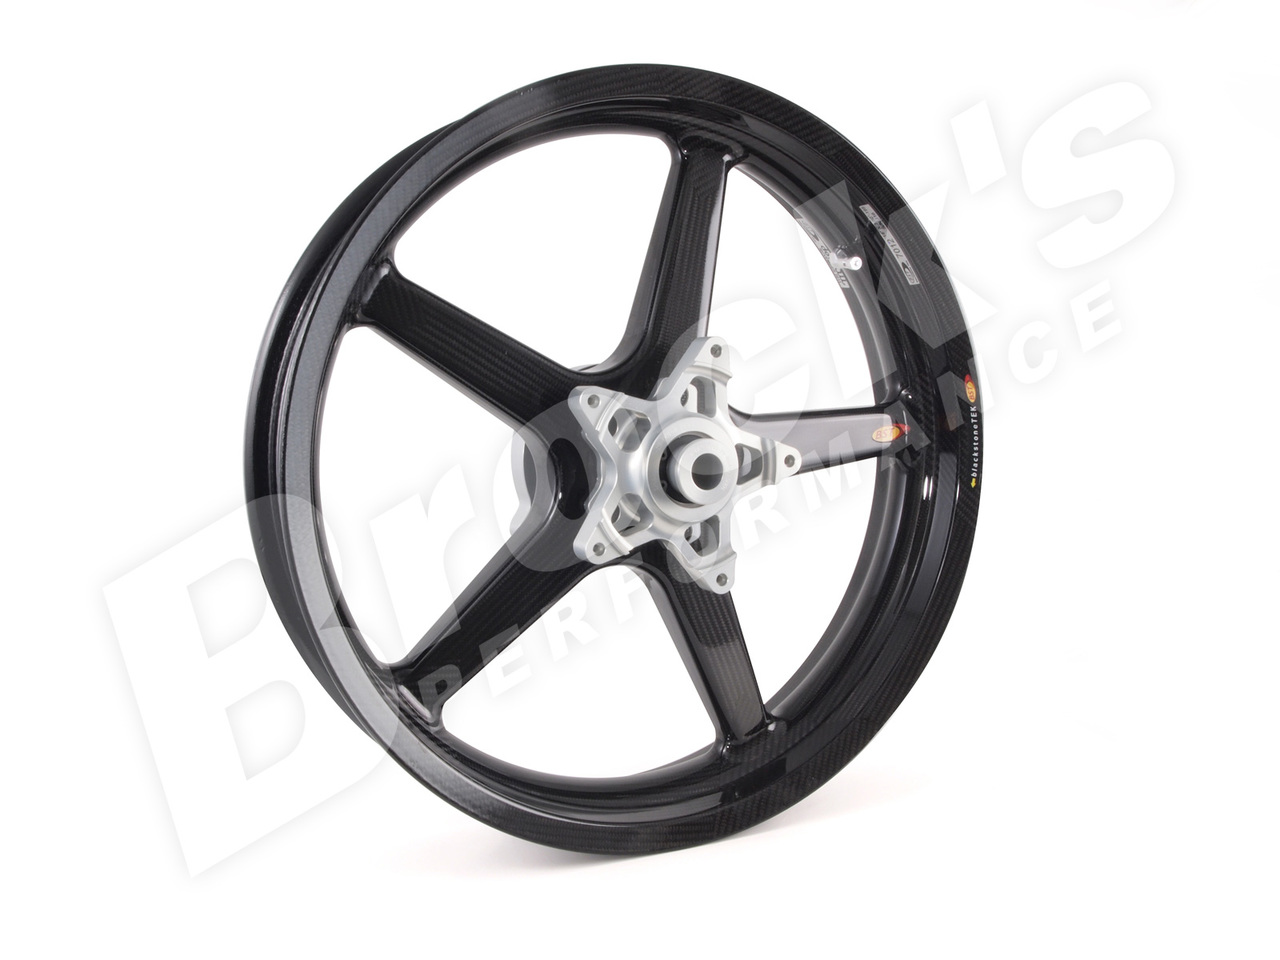 Buy BST Twin TEK 18 x 3.5 Front Wheel -Yamaha VMAX (09-21) SKU: 165824 at the price of US$ 2350 | BrocksPerformance.com